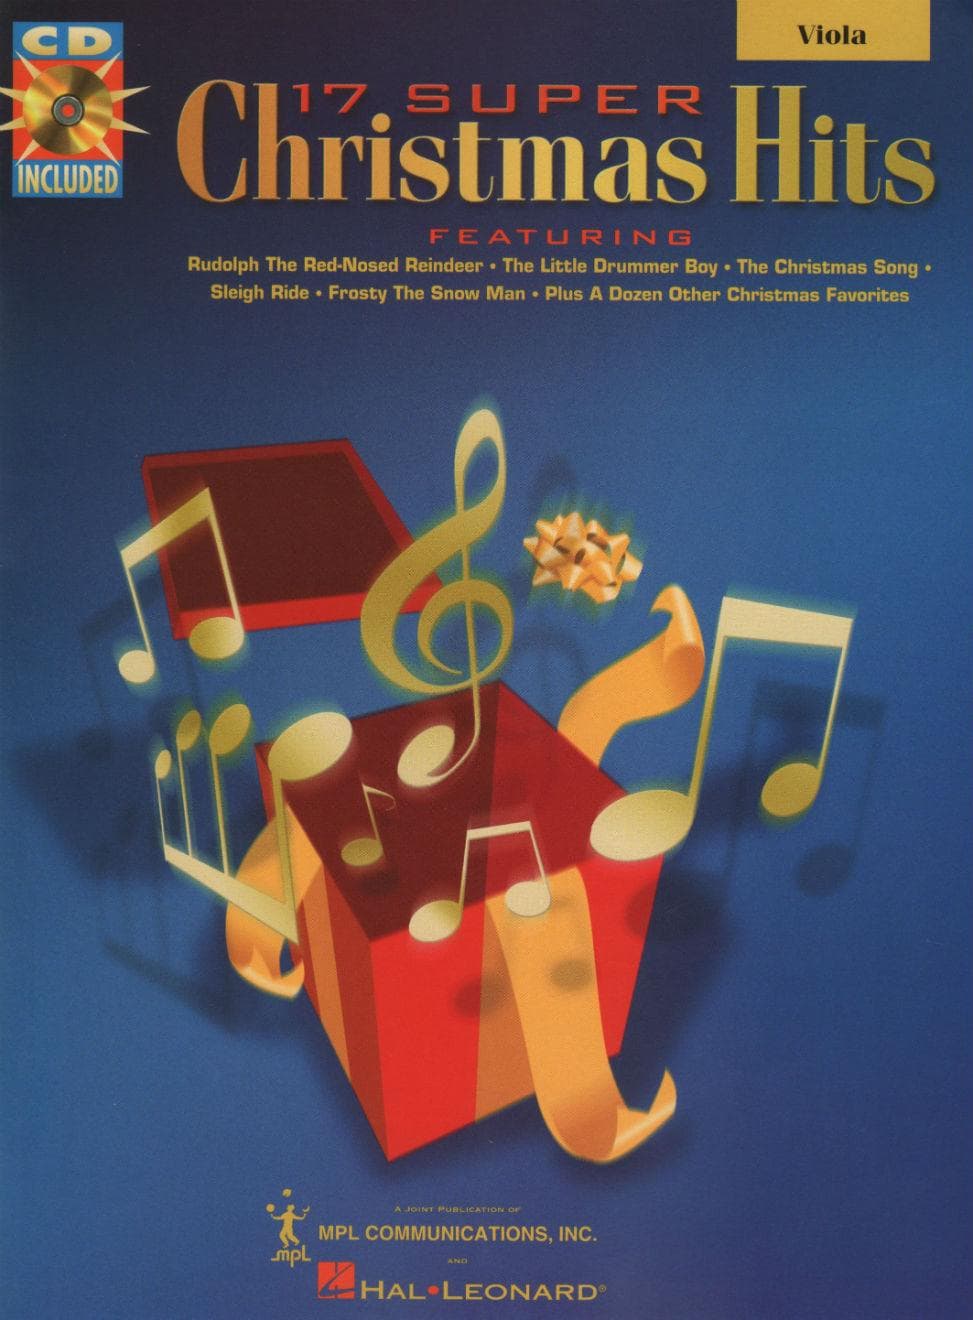 17 Super Christmas Hits - Viola - Book/CD set - Hal Leonard Edition